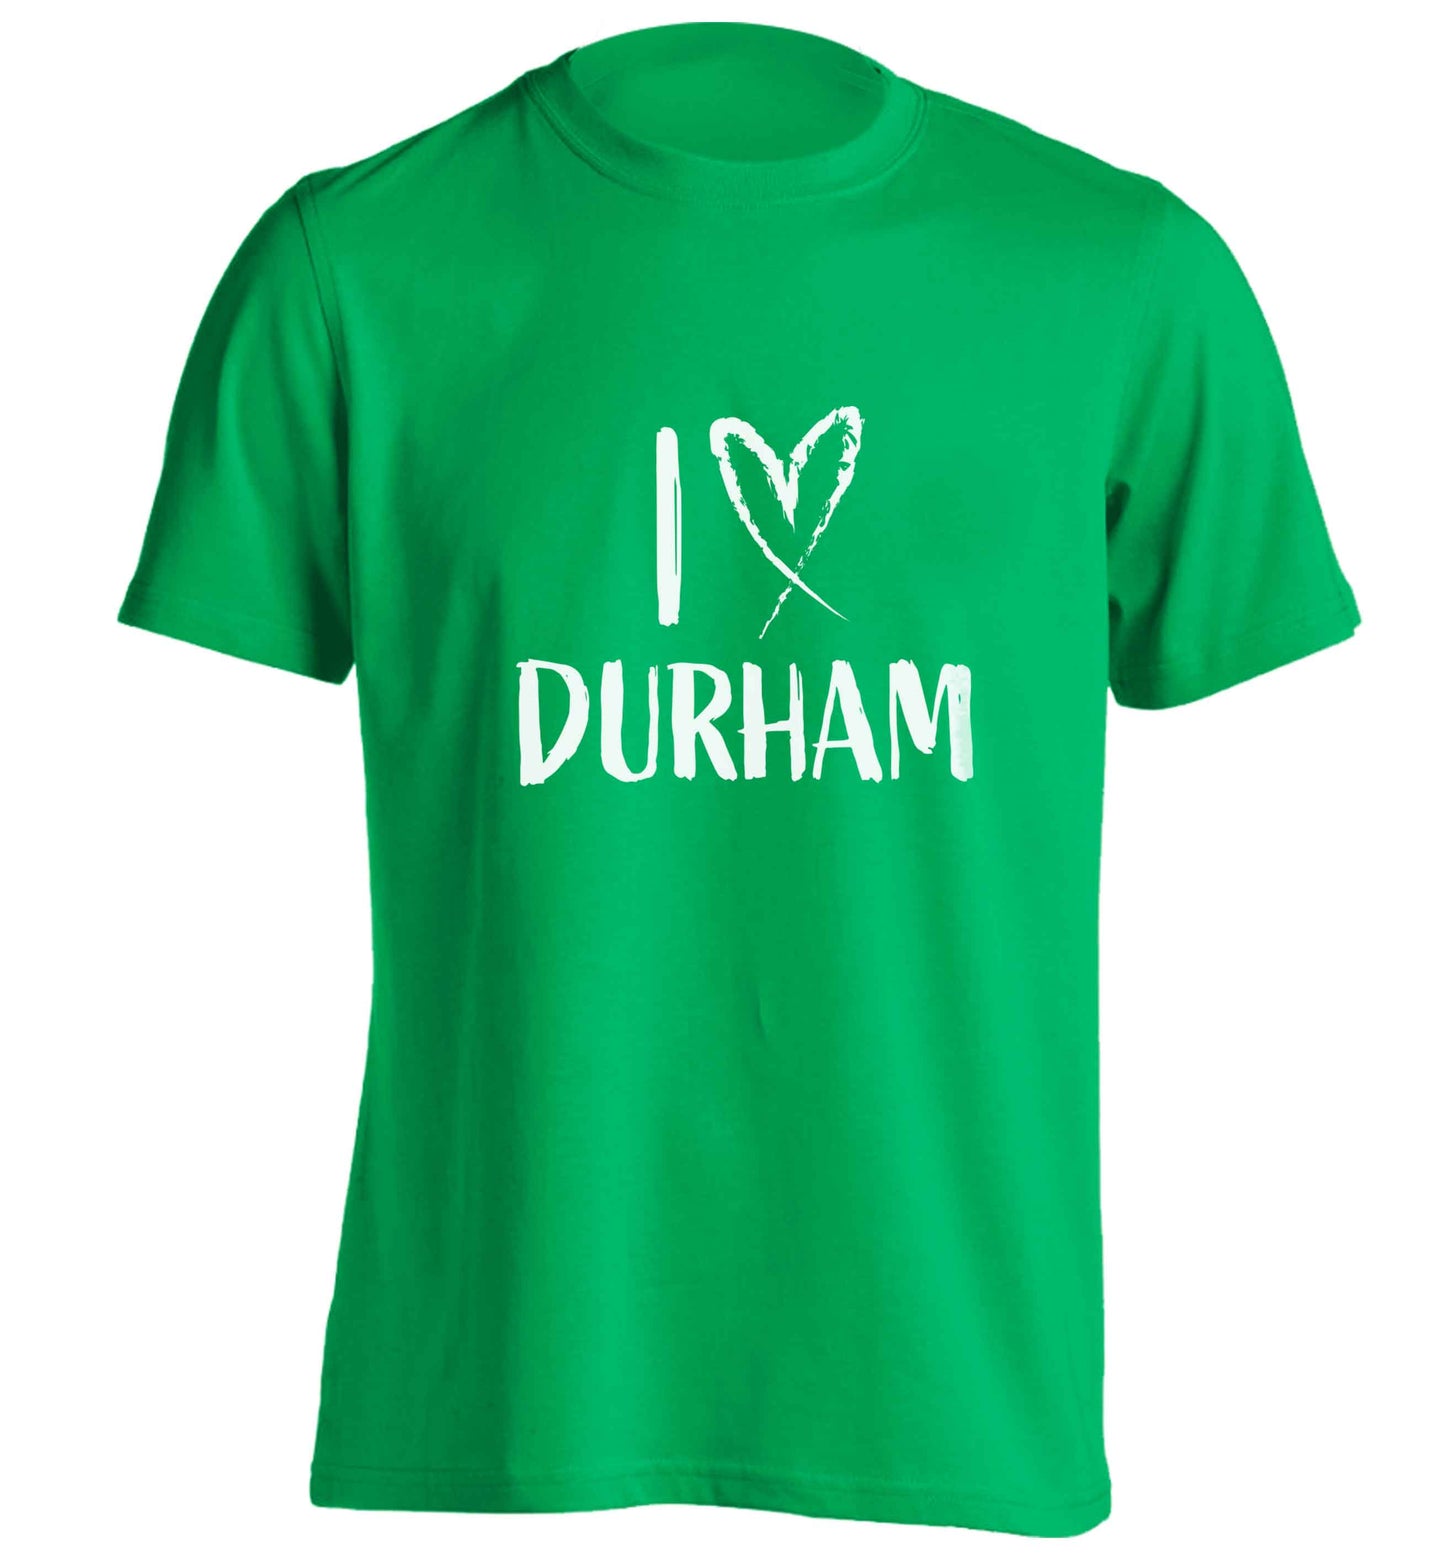 I love Durham adults unisex green Tshirt 2XL